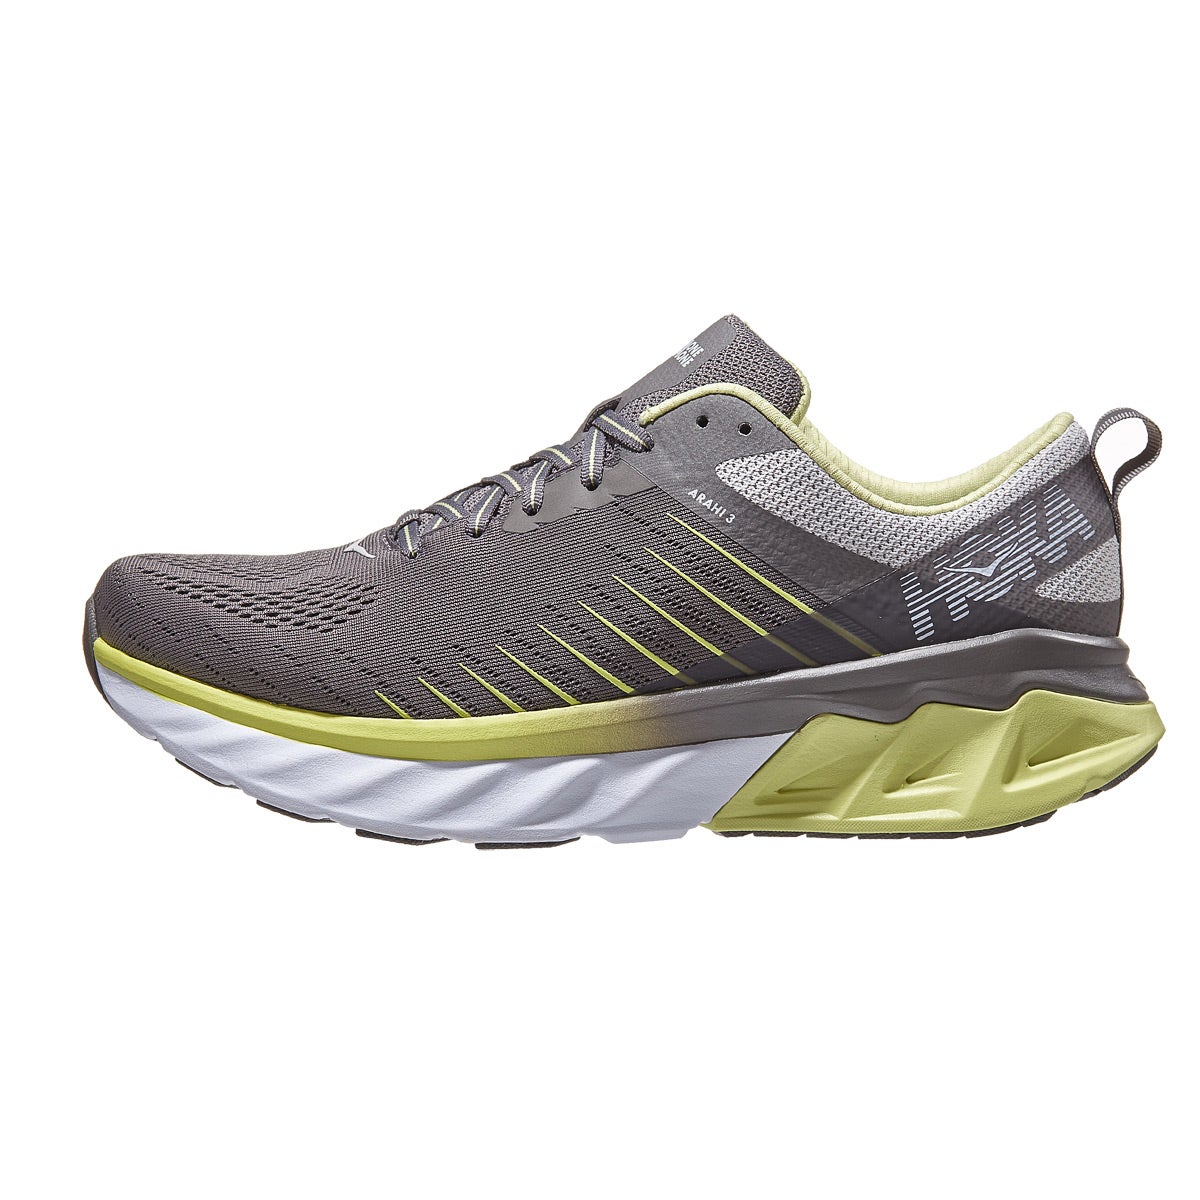 HOKA ONE ONE Arahi 3 Men's Shoes Charcoal Gray/Lime 360° View | Running ...